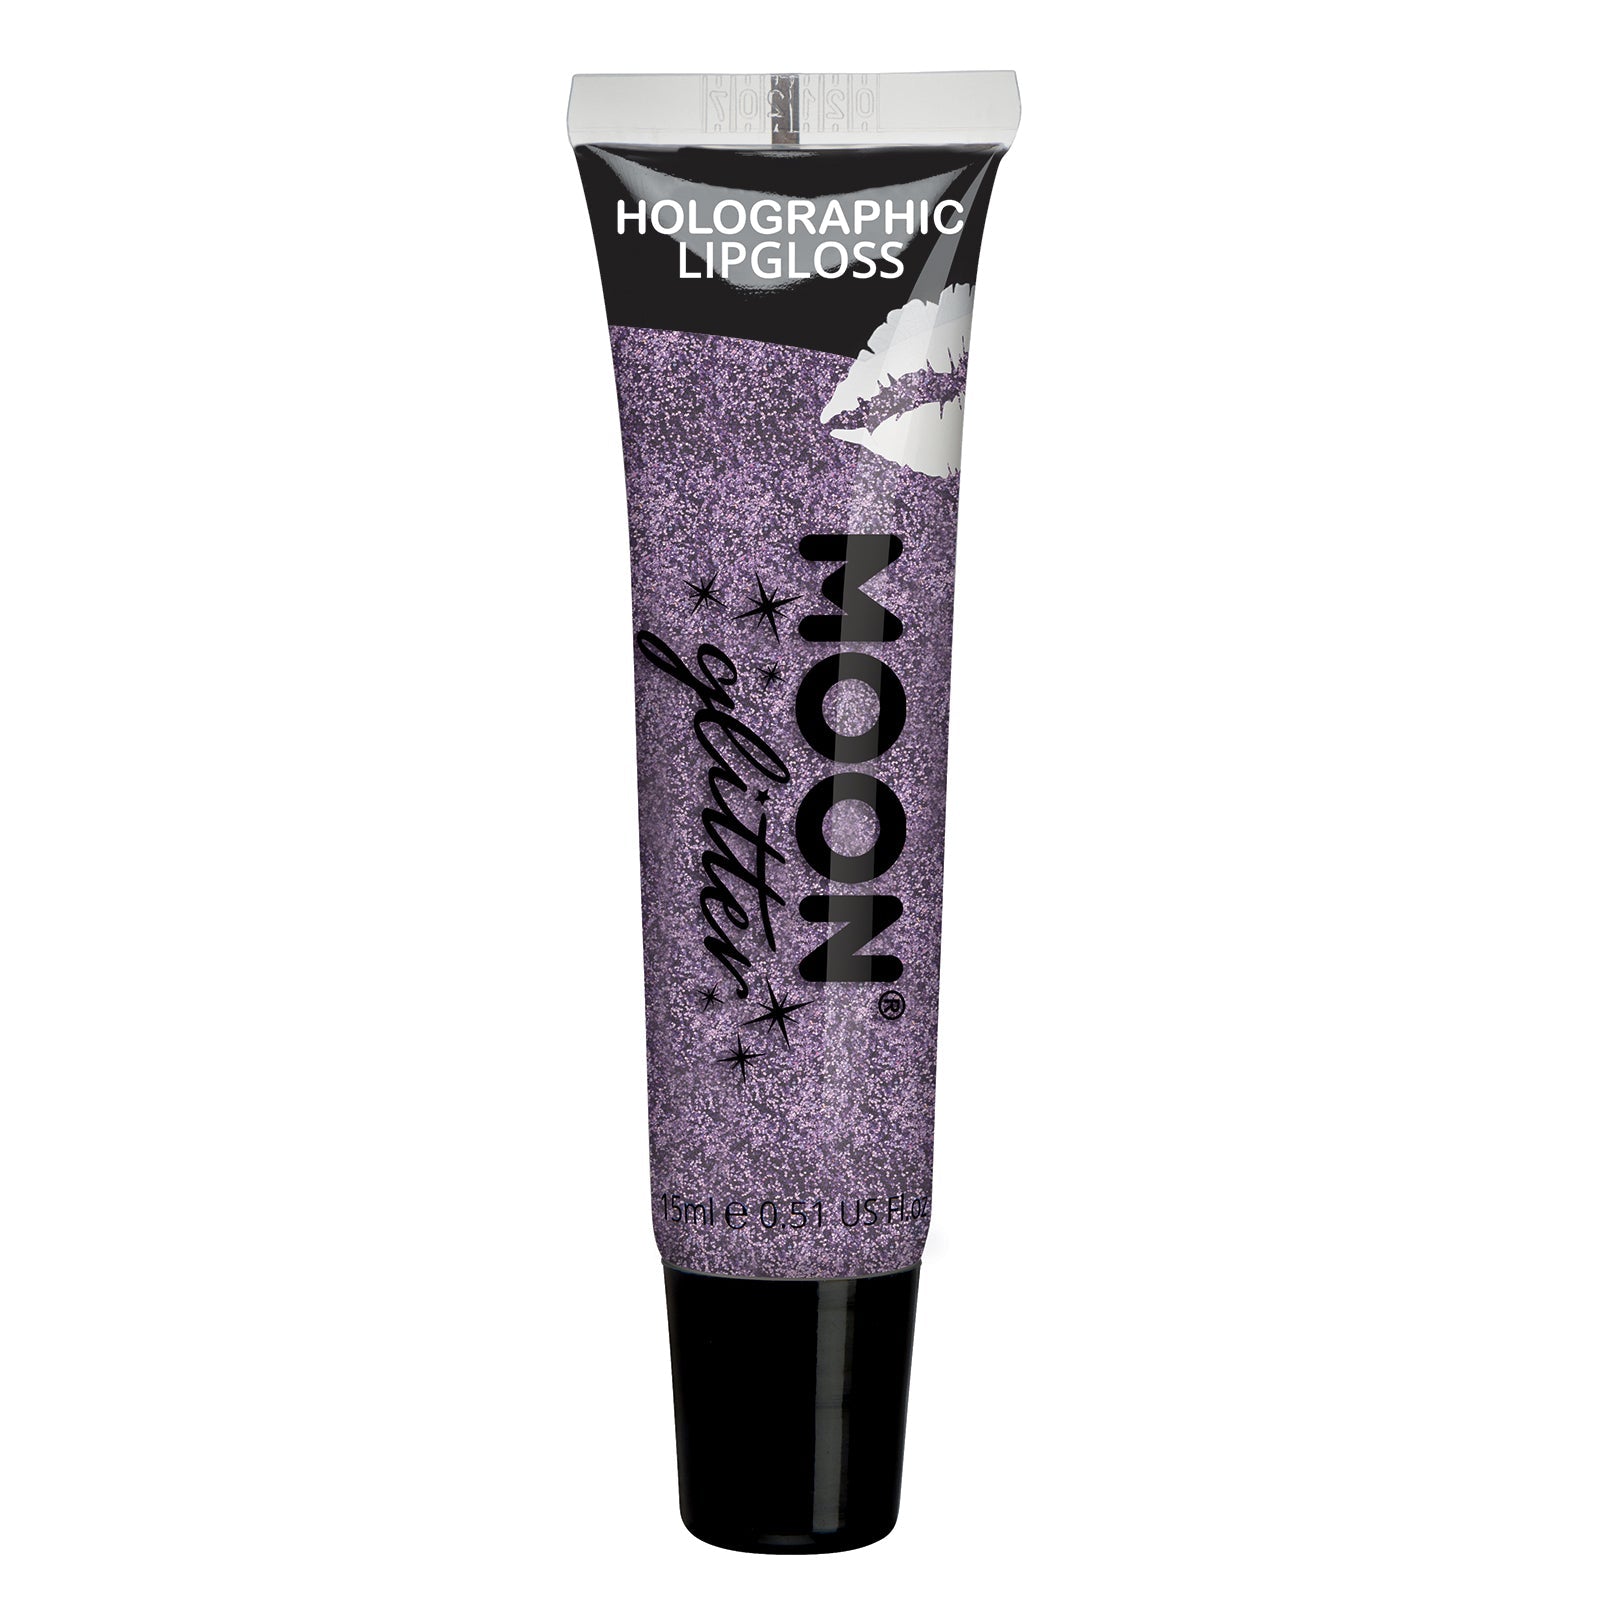 Purple - Holographic Glitter Lip Gloss, 5g. Cosmetically certified, FDA & Health Canada compliant, cruelty free and vegan.